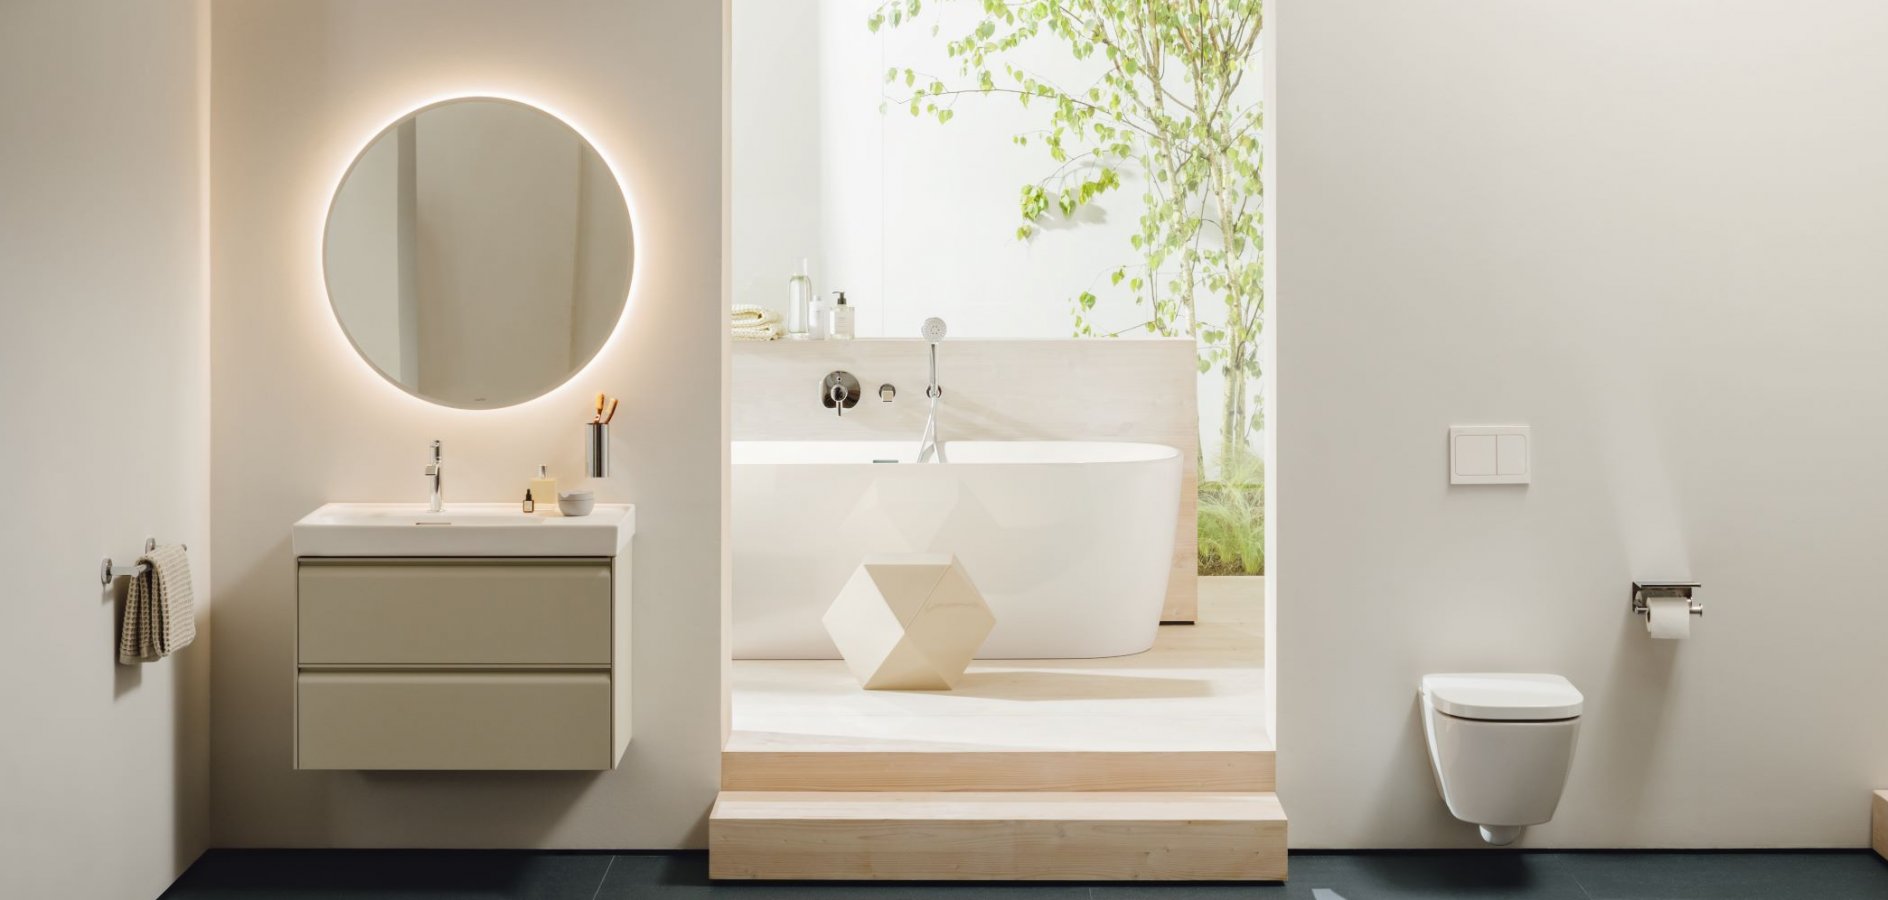 LAUFEN bathroom collection series MEDA, with washbasin, sink, faucet, bathtub, including bath furniture, Peter Wirz design